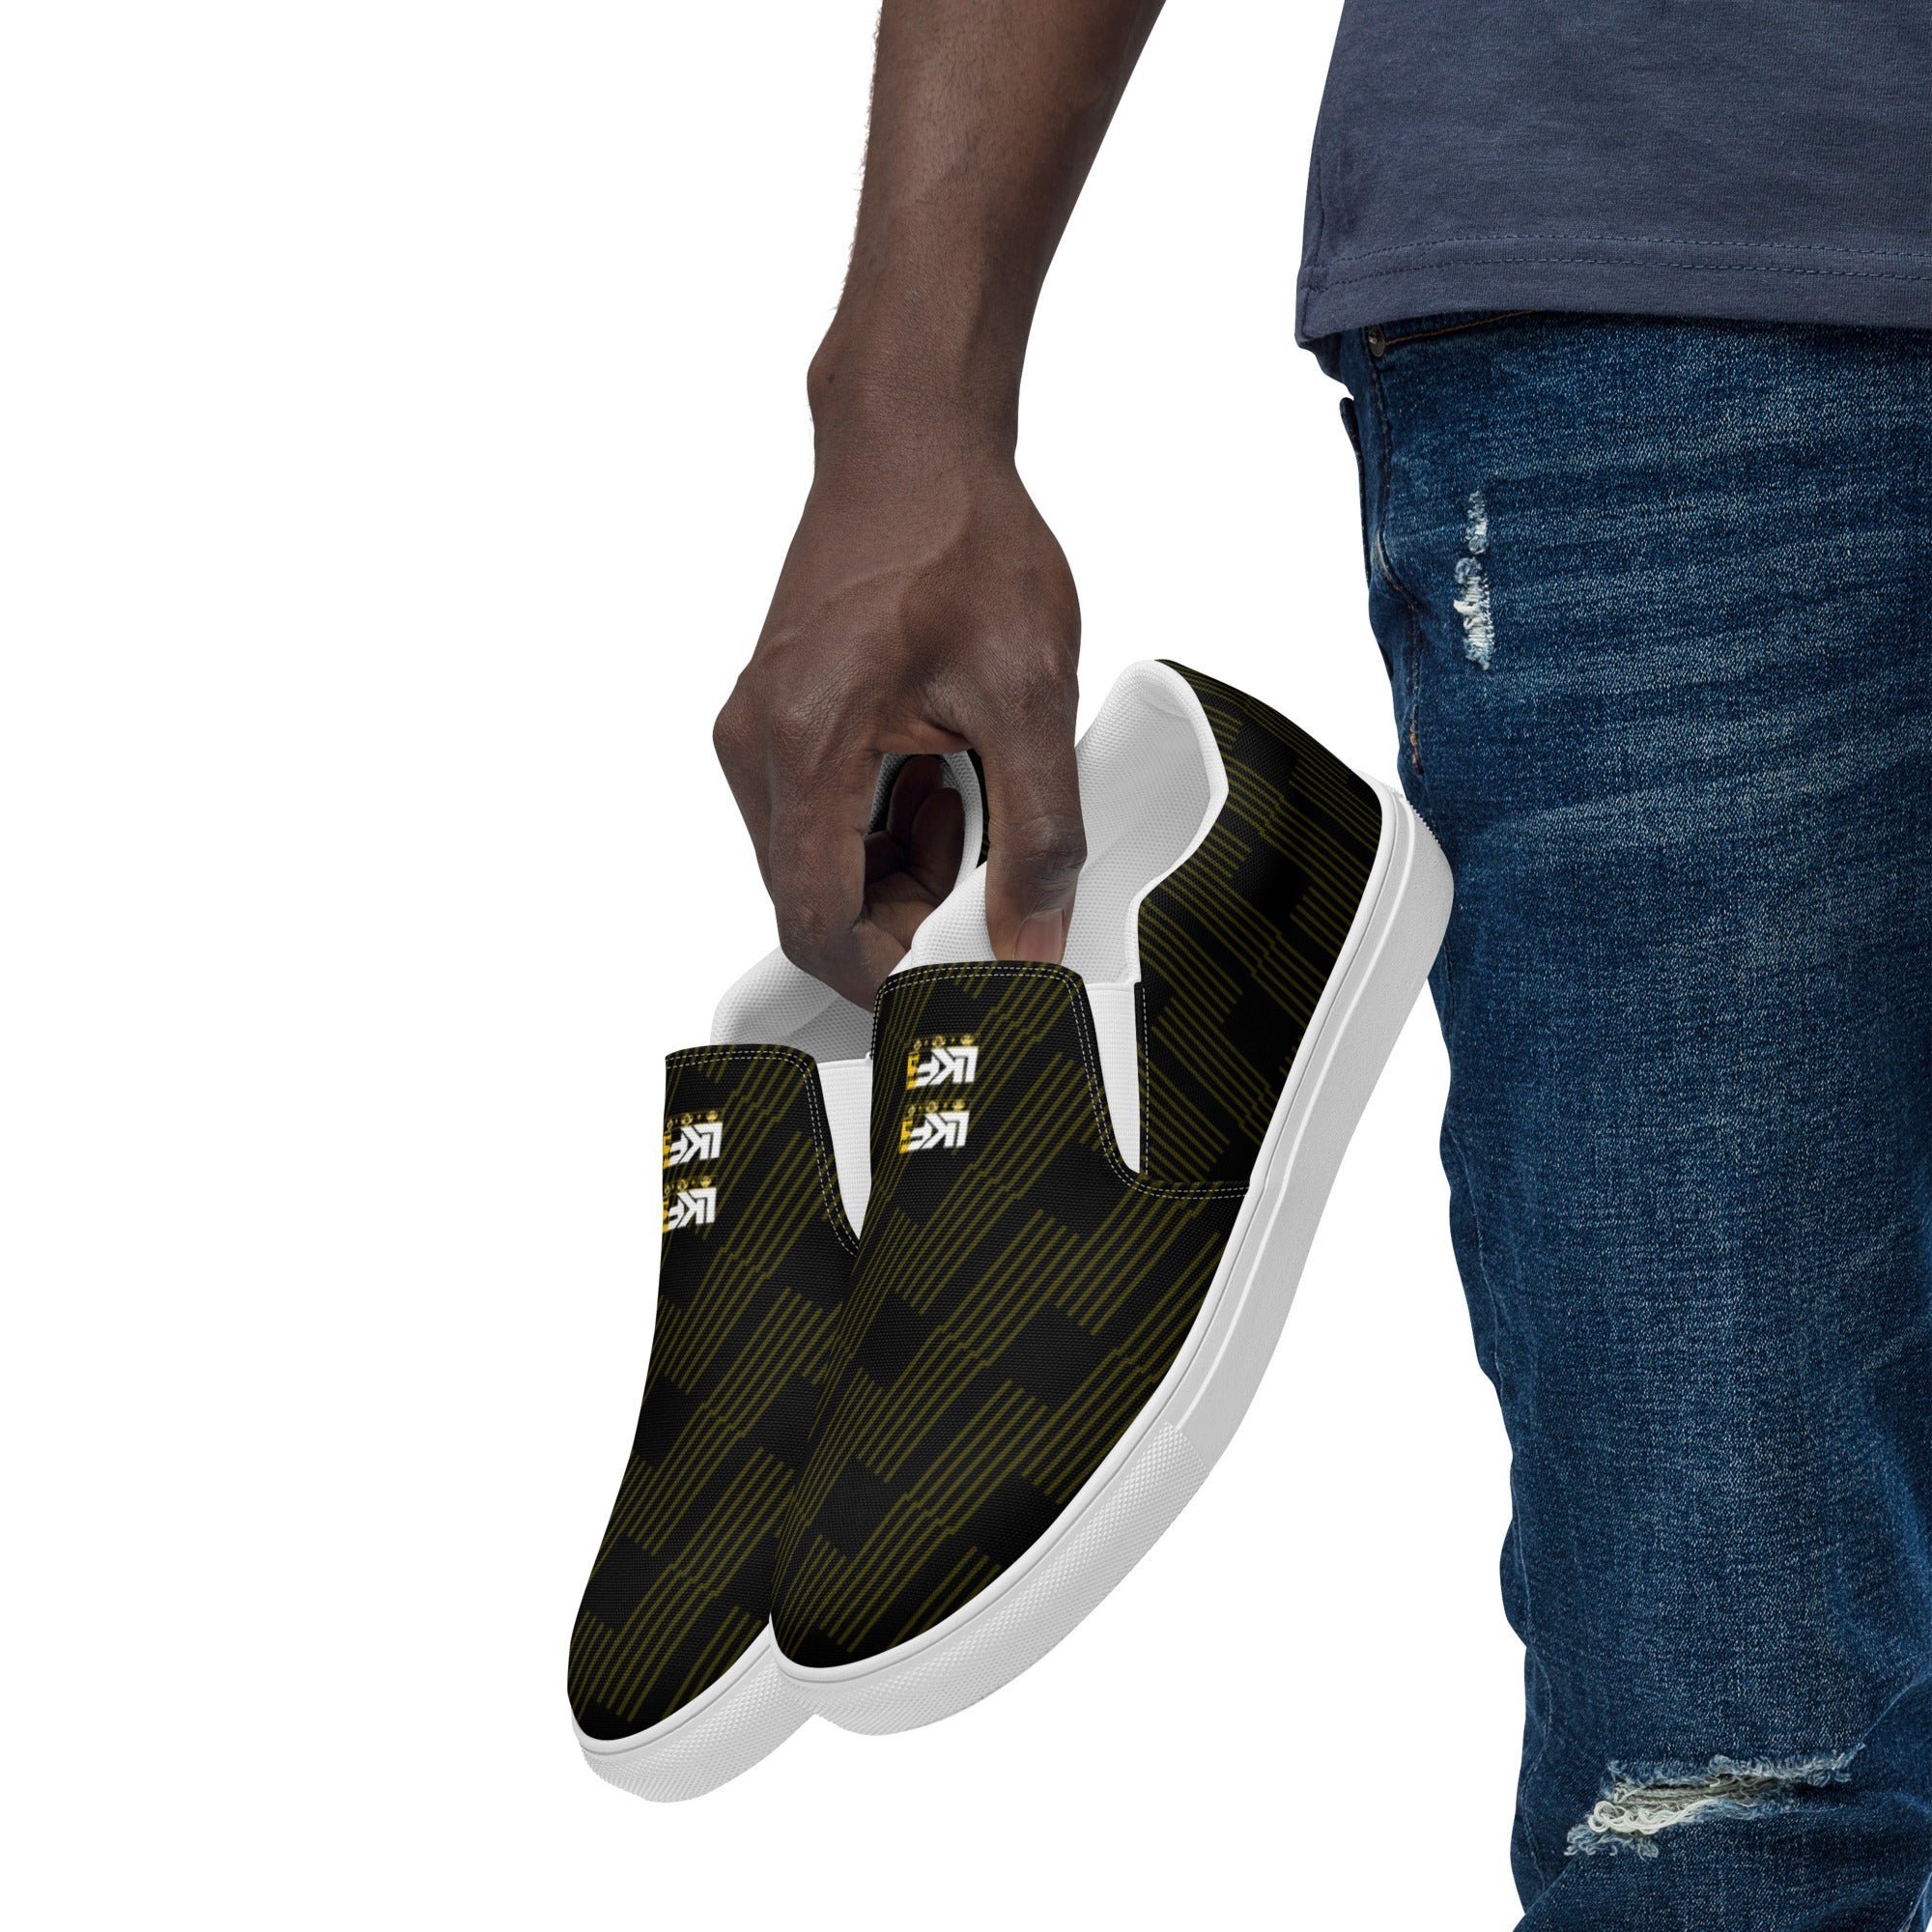 lkf9 Men’s slip-on canvas shoes black